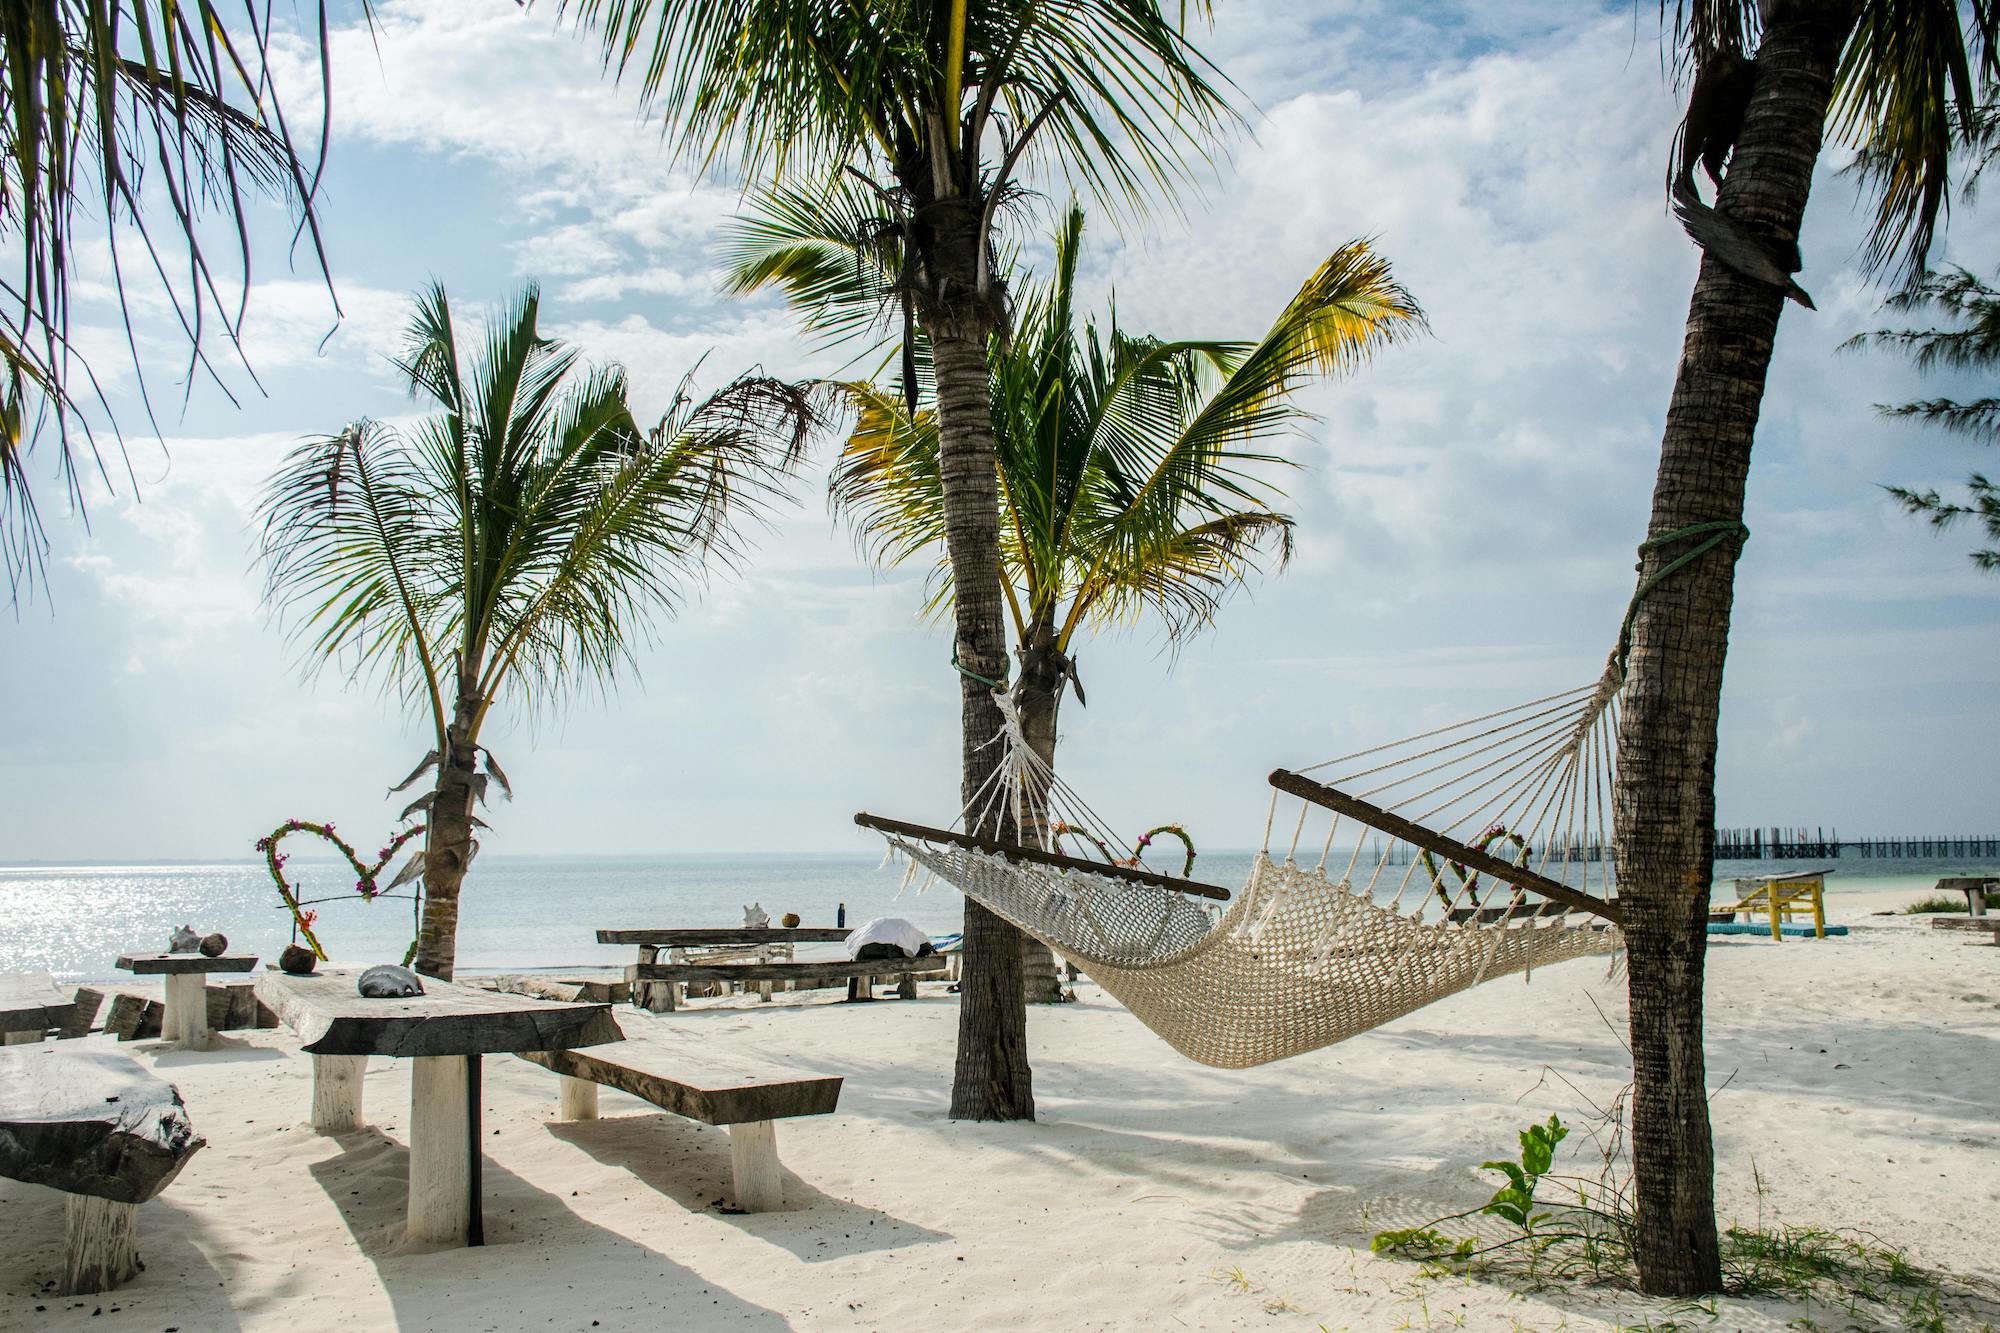 5-Day Beauty of Zanzibar & Beach Relaxation